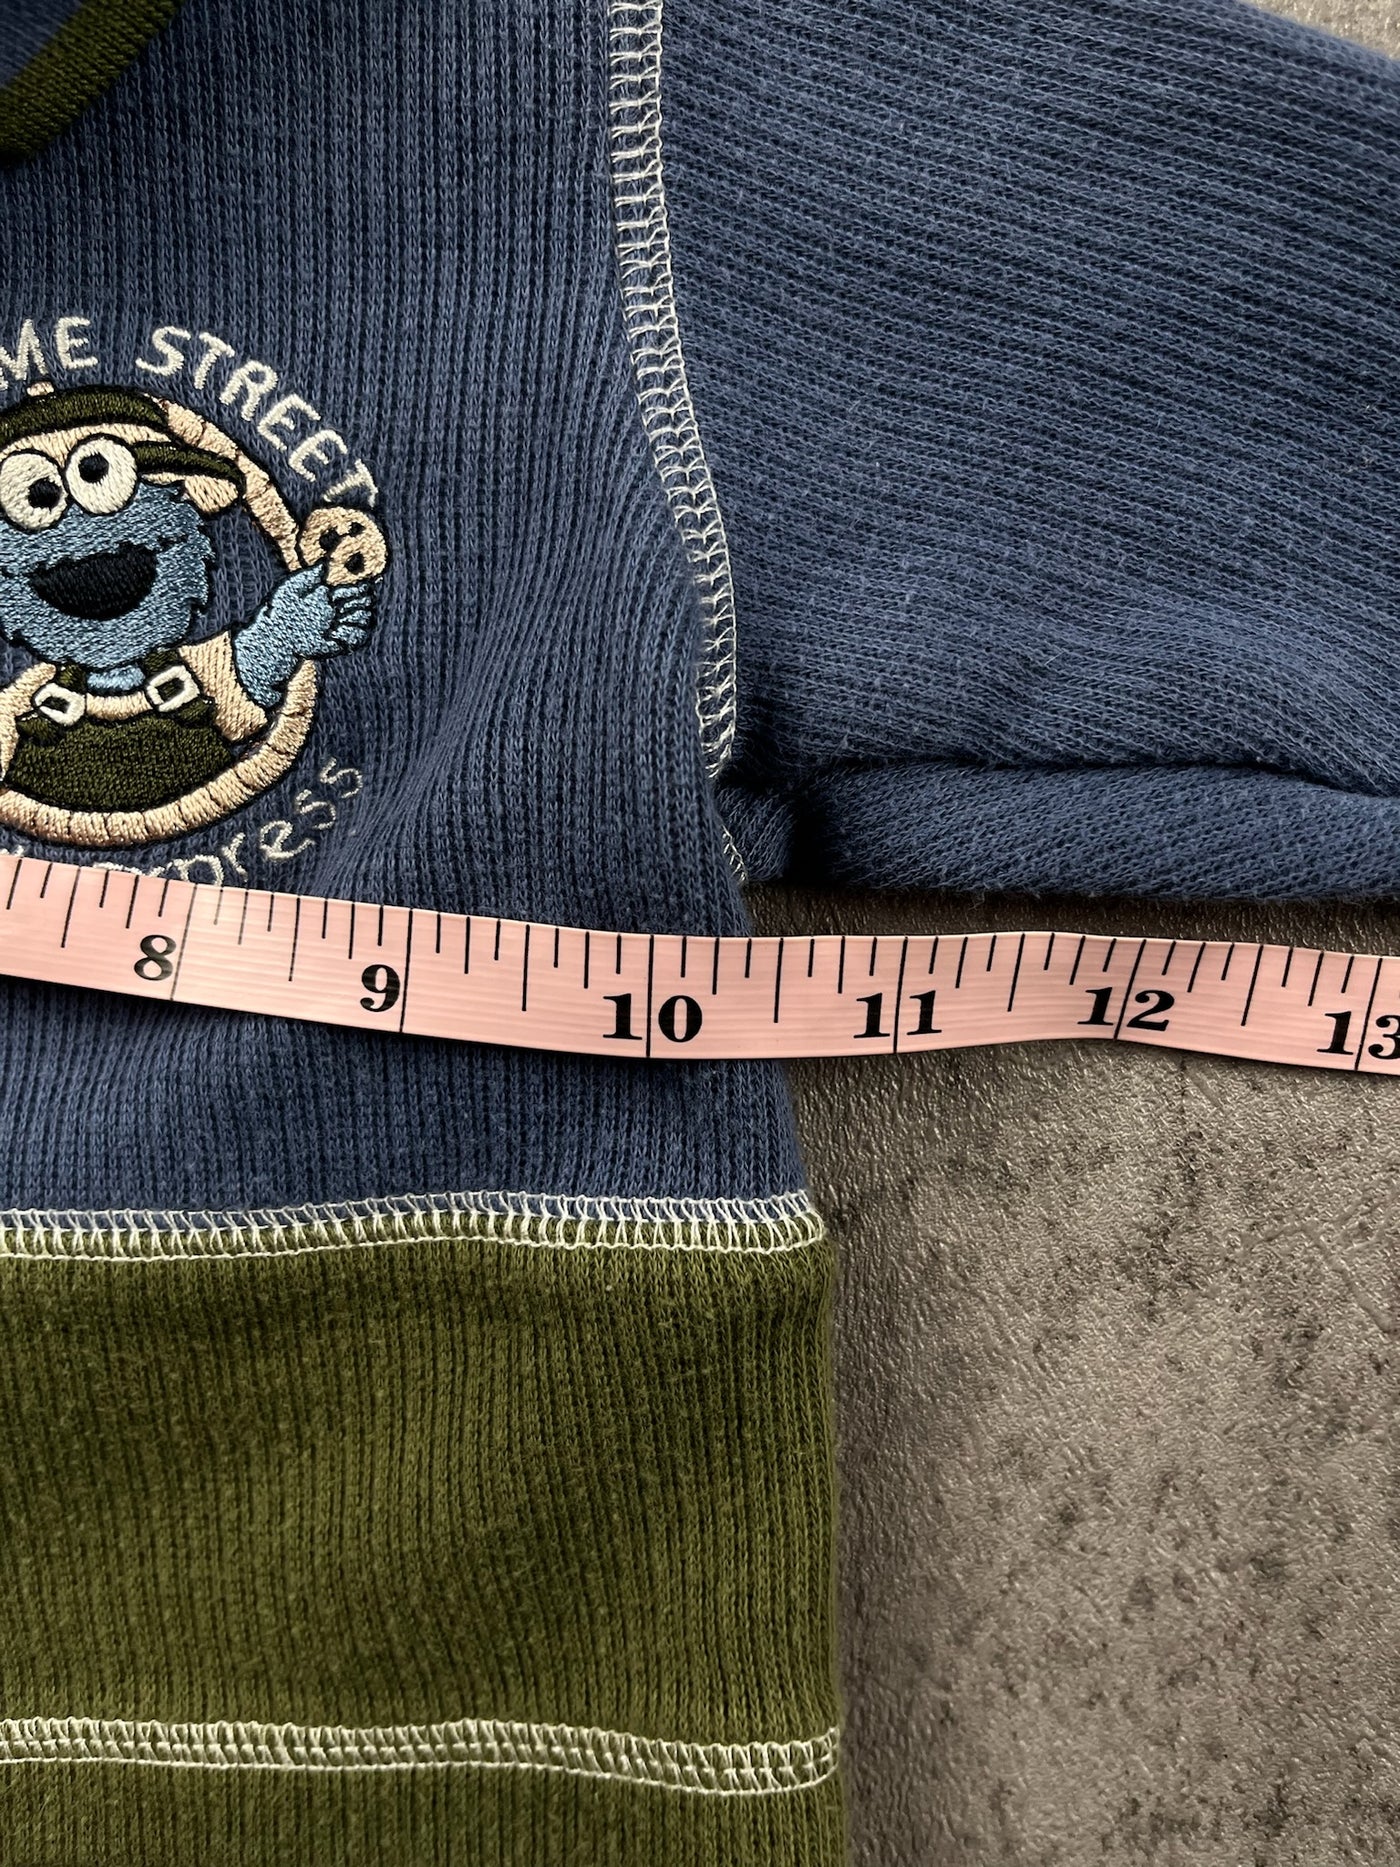 Vintage Cookie Monster 0-3 Months